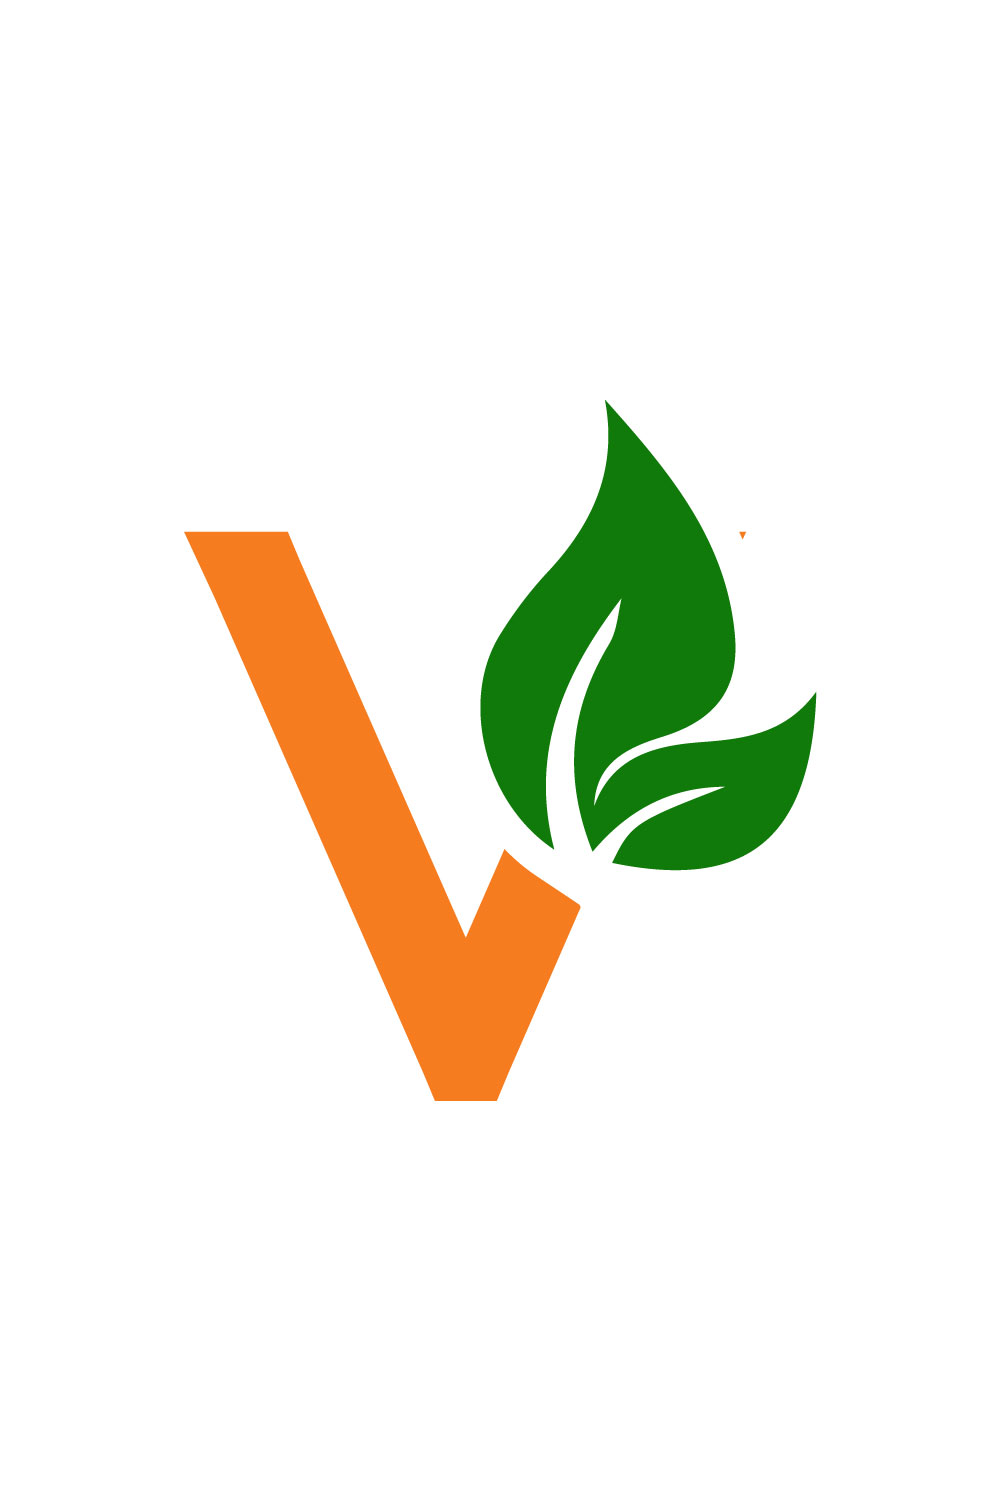 Free V typography logo pinterest preview image.